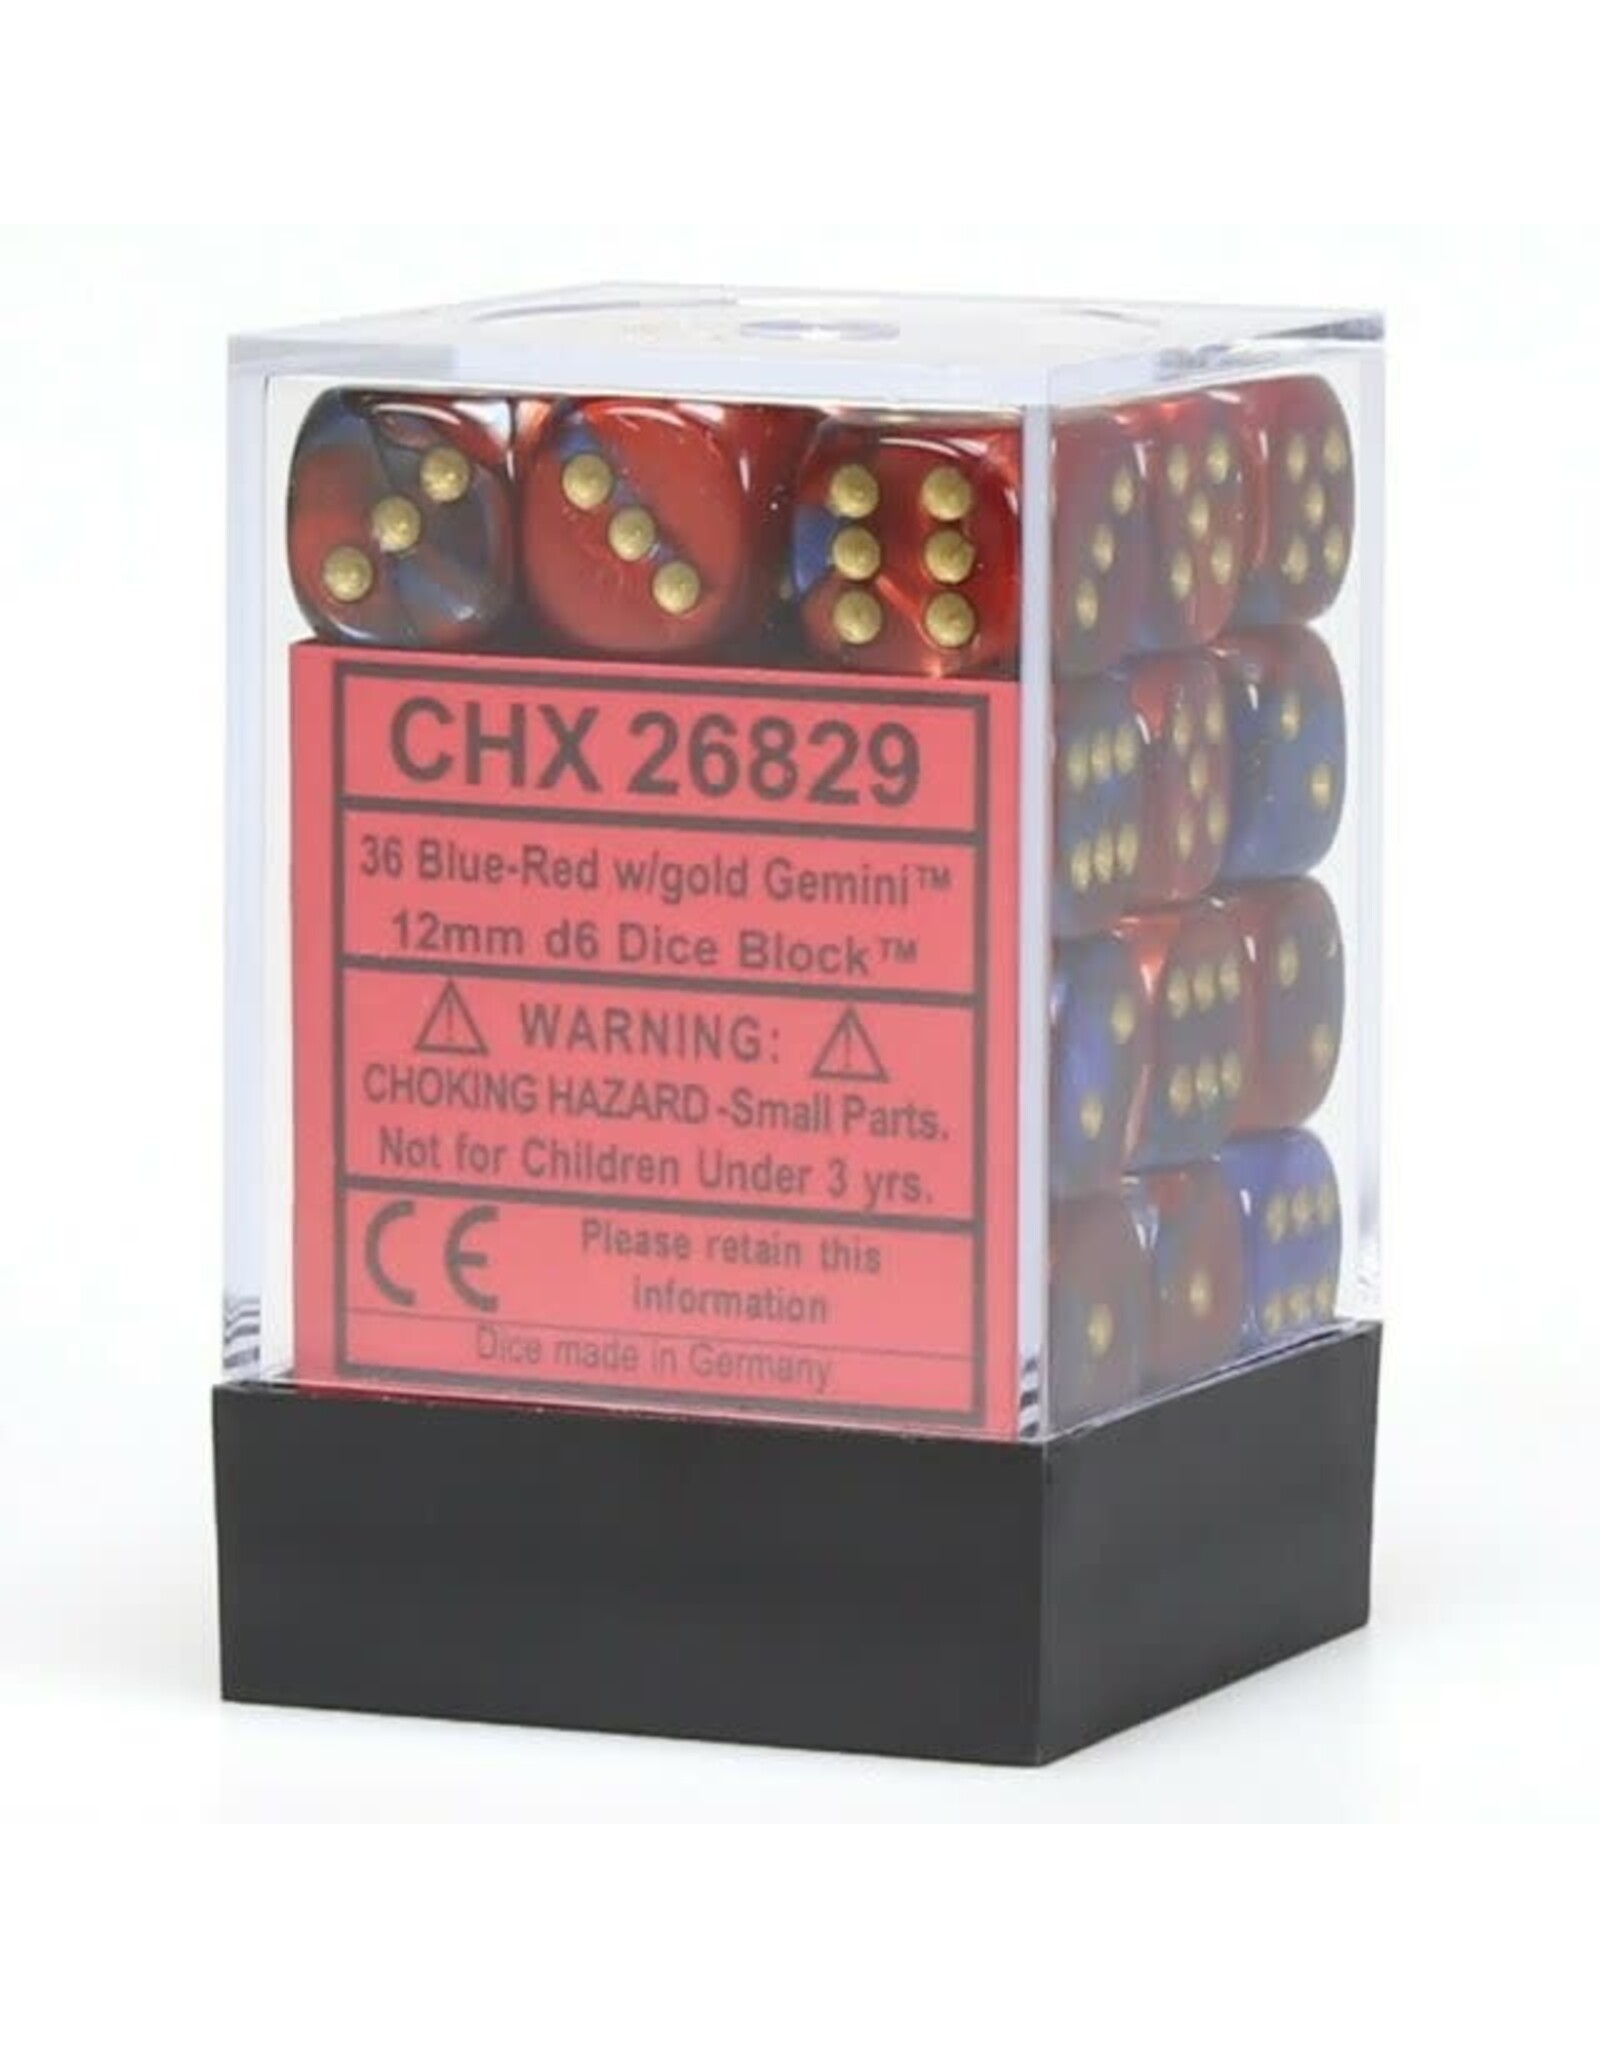 Chessex Blue-Red w/gold Gemini 12mm d6 dice set